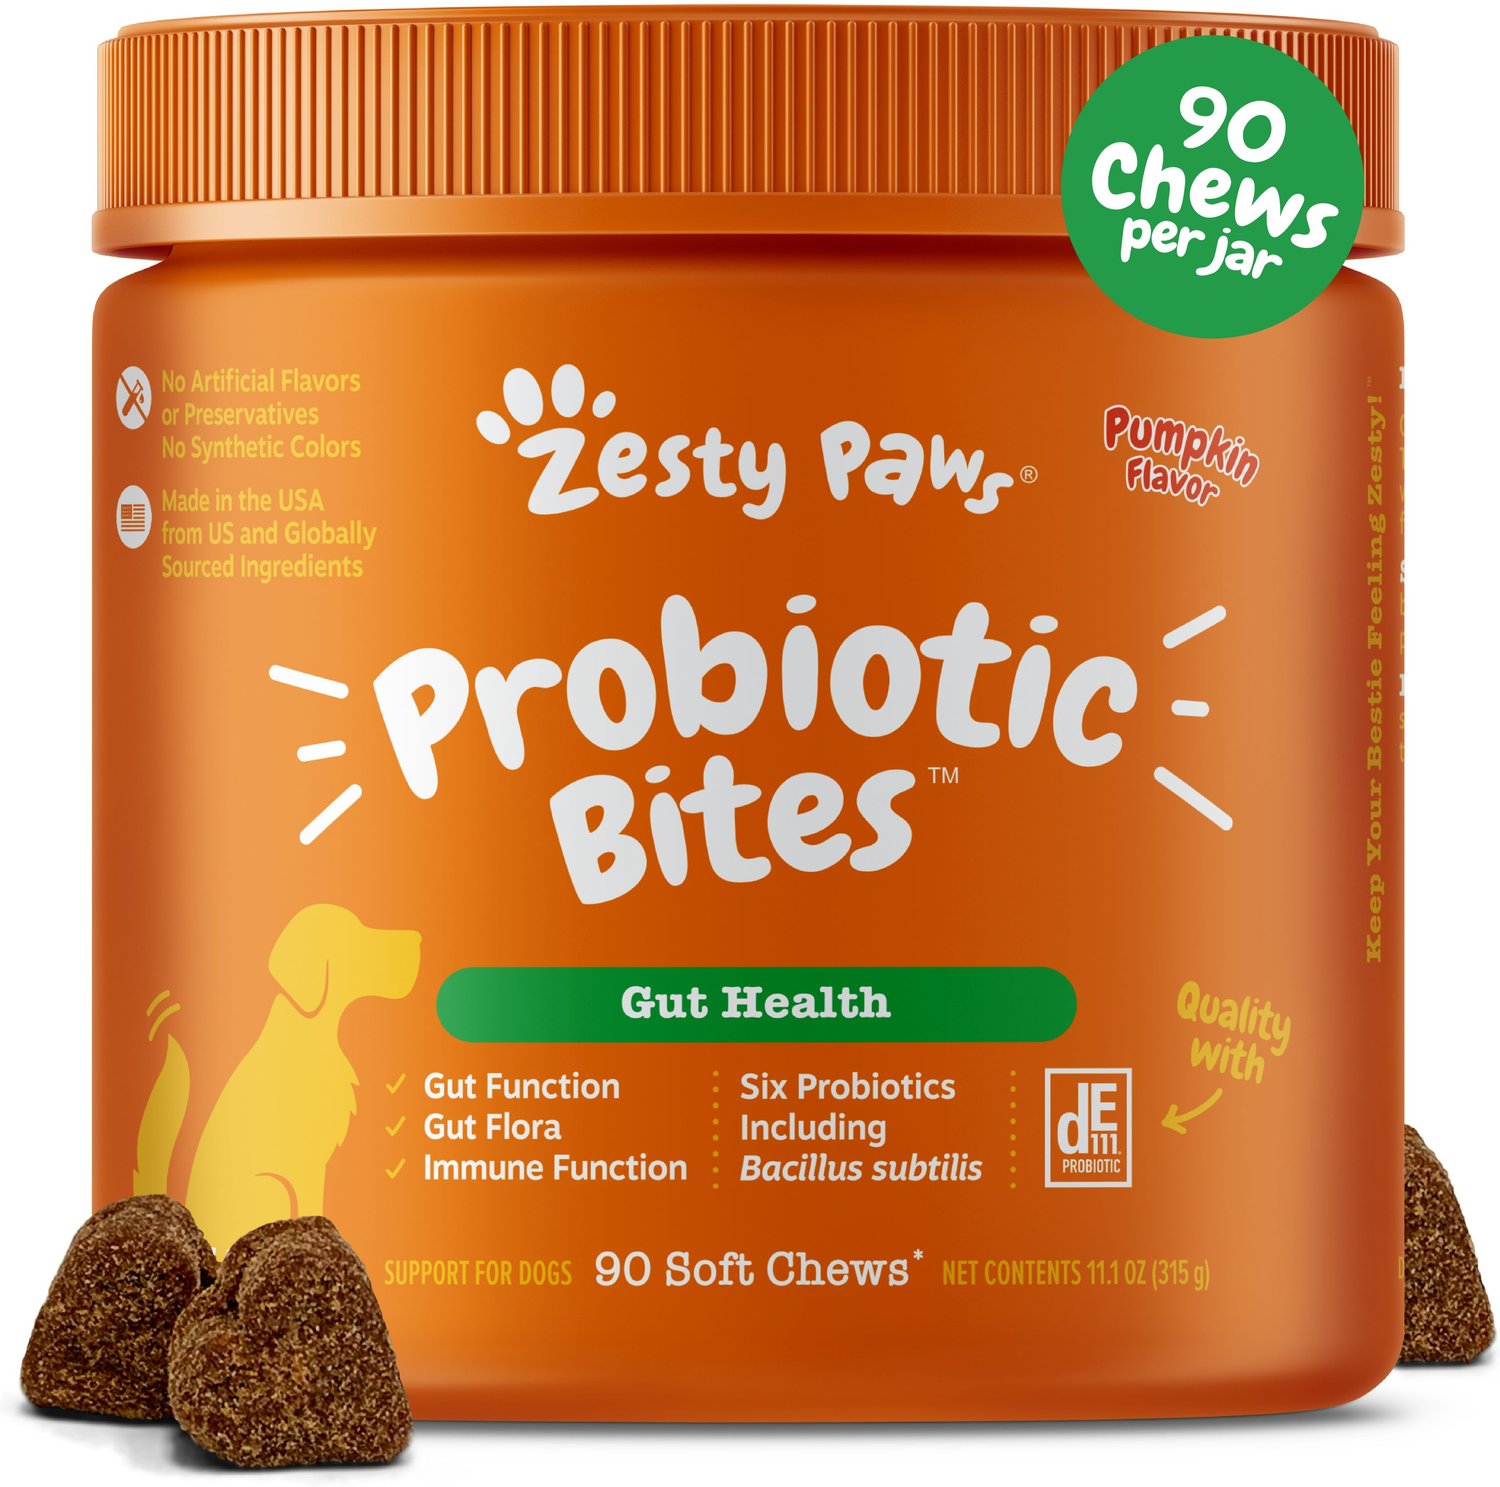 Zesty Paws Probiotic Bites Pumpkin Flavored Soft Chews